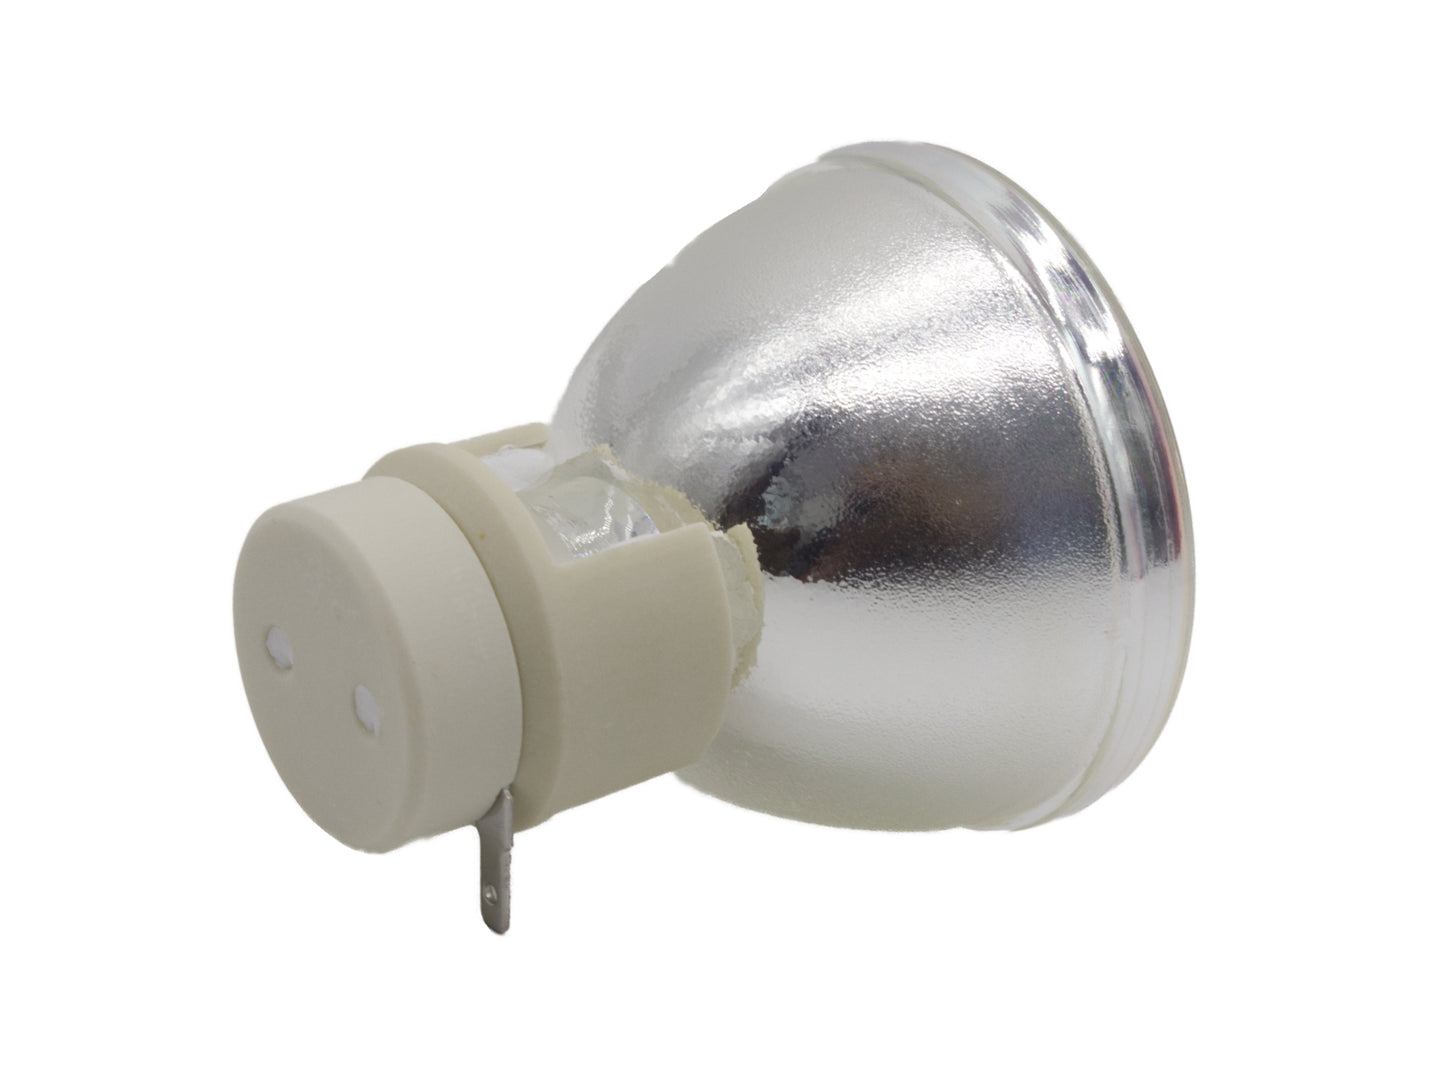 azurano Beamerlampe für ACER MC.JH411.002 Ersatzlampe Projektorlampe - Bild 4